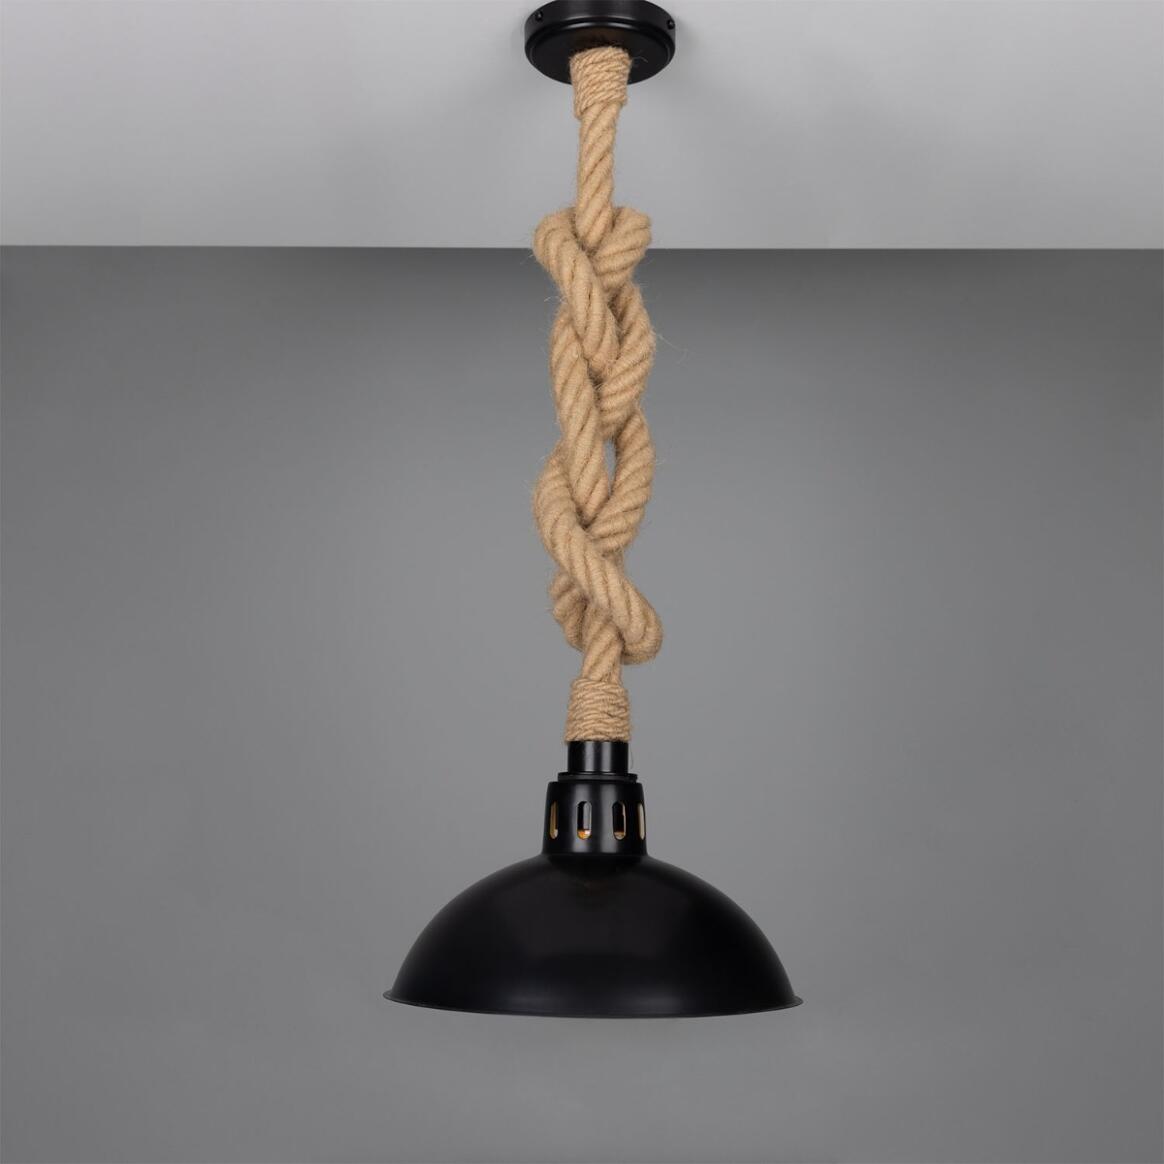 30mm Rope Pendant Lamp With Black Finish -  Singapore